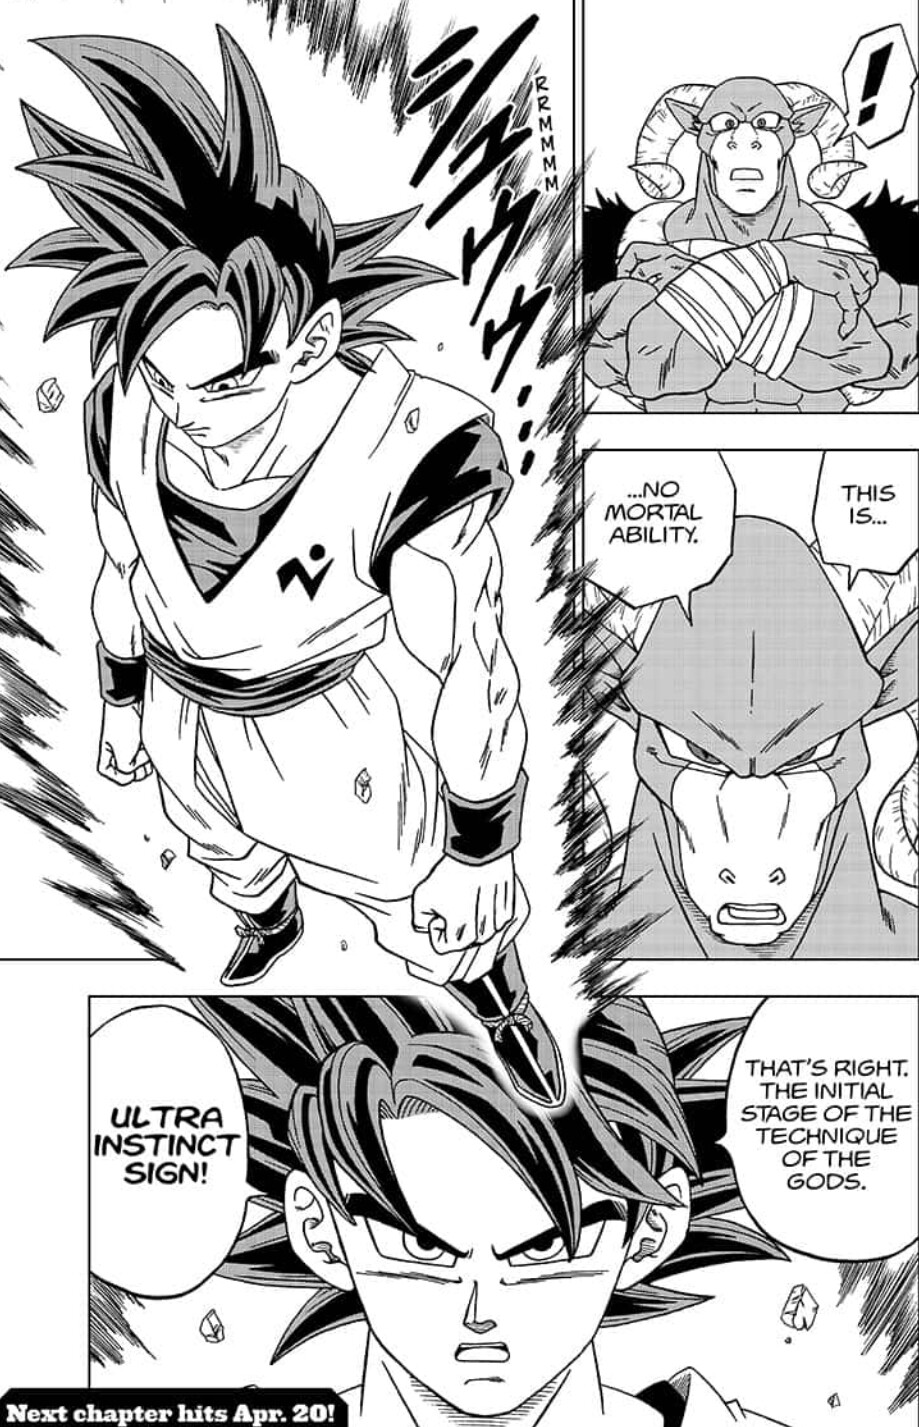 Dragon Ball Super enthüllt Son Gokus Ultra Instinct Sign-Form.